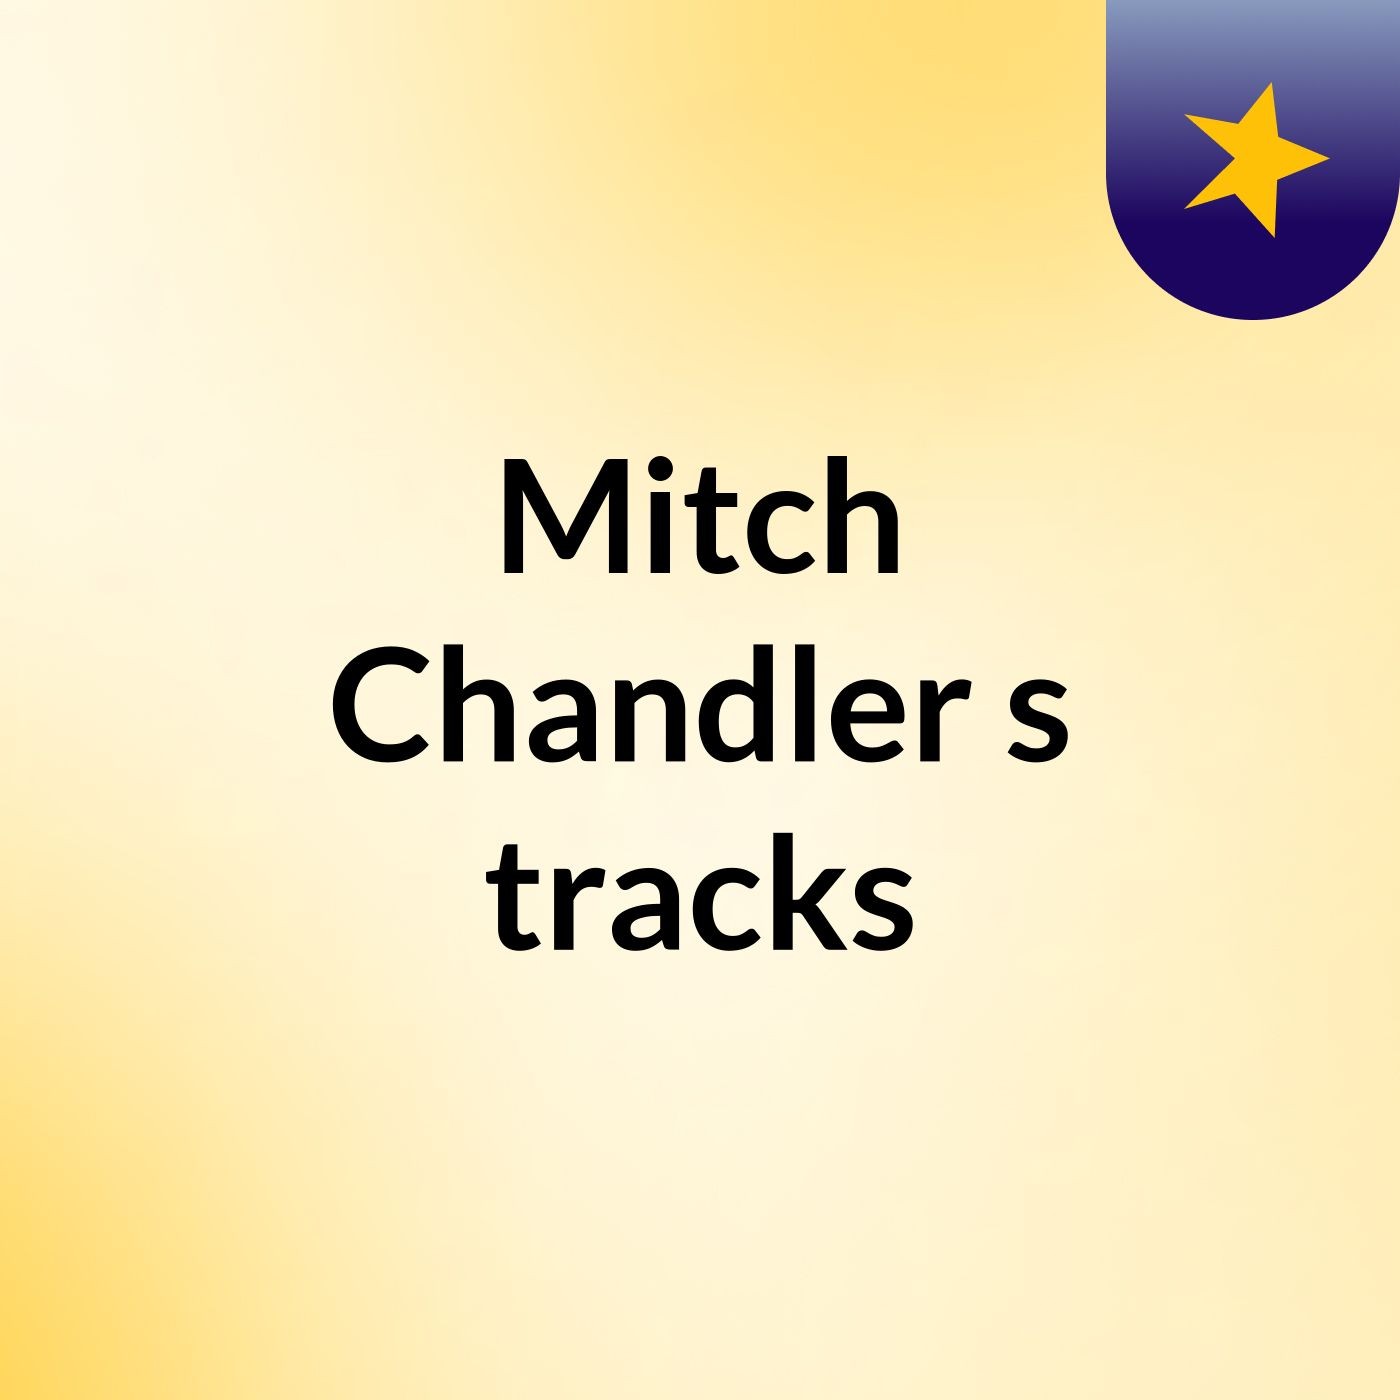 Mitch Chandler's tracks